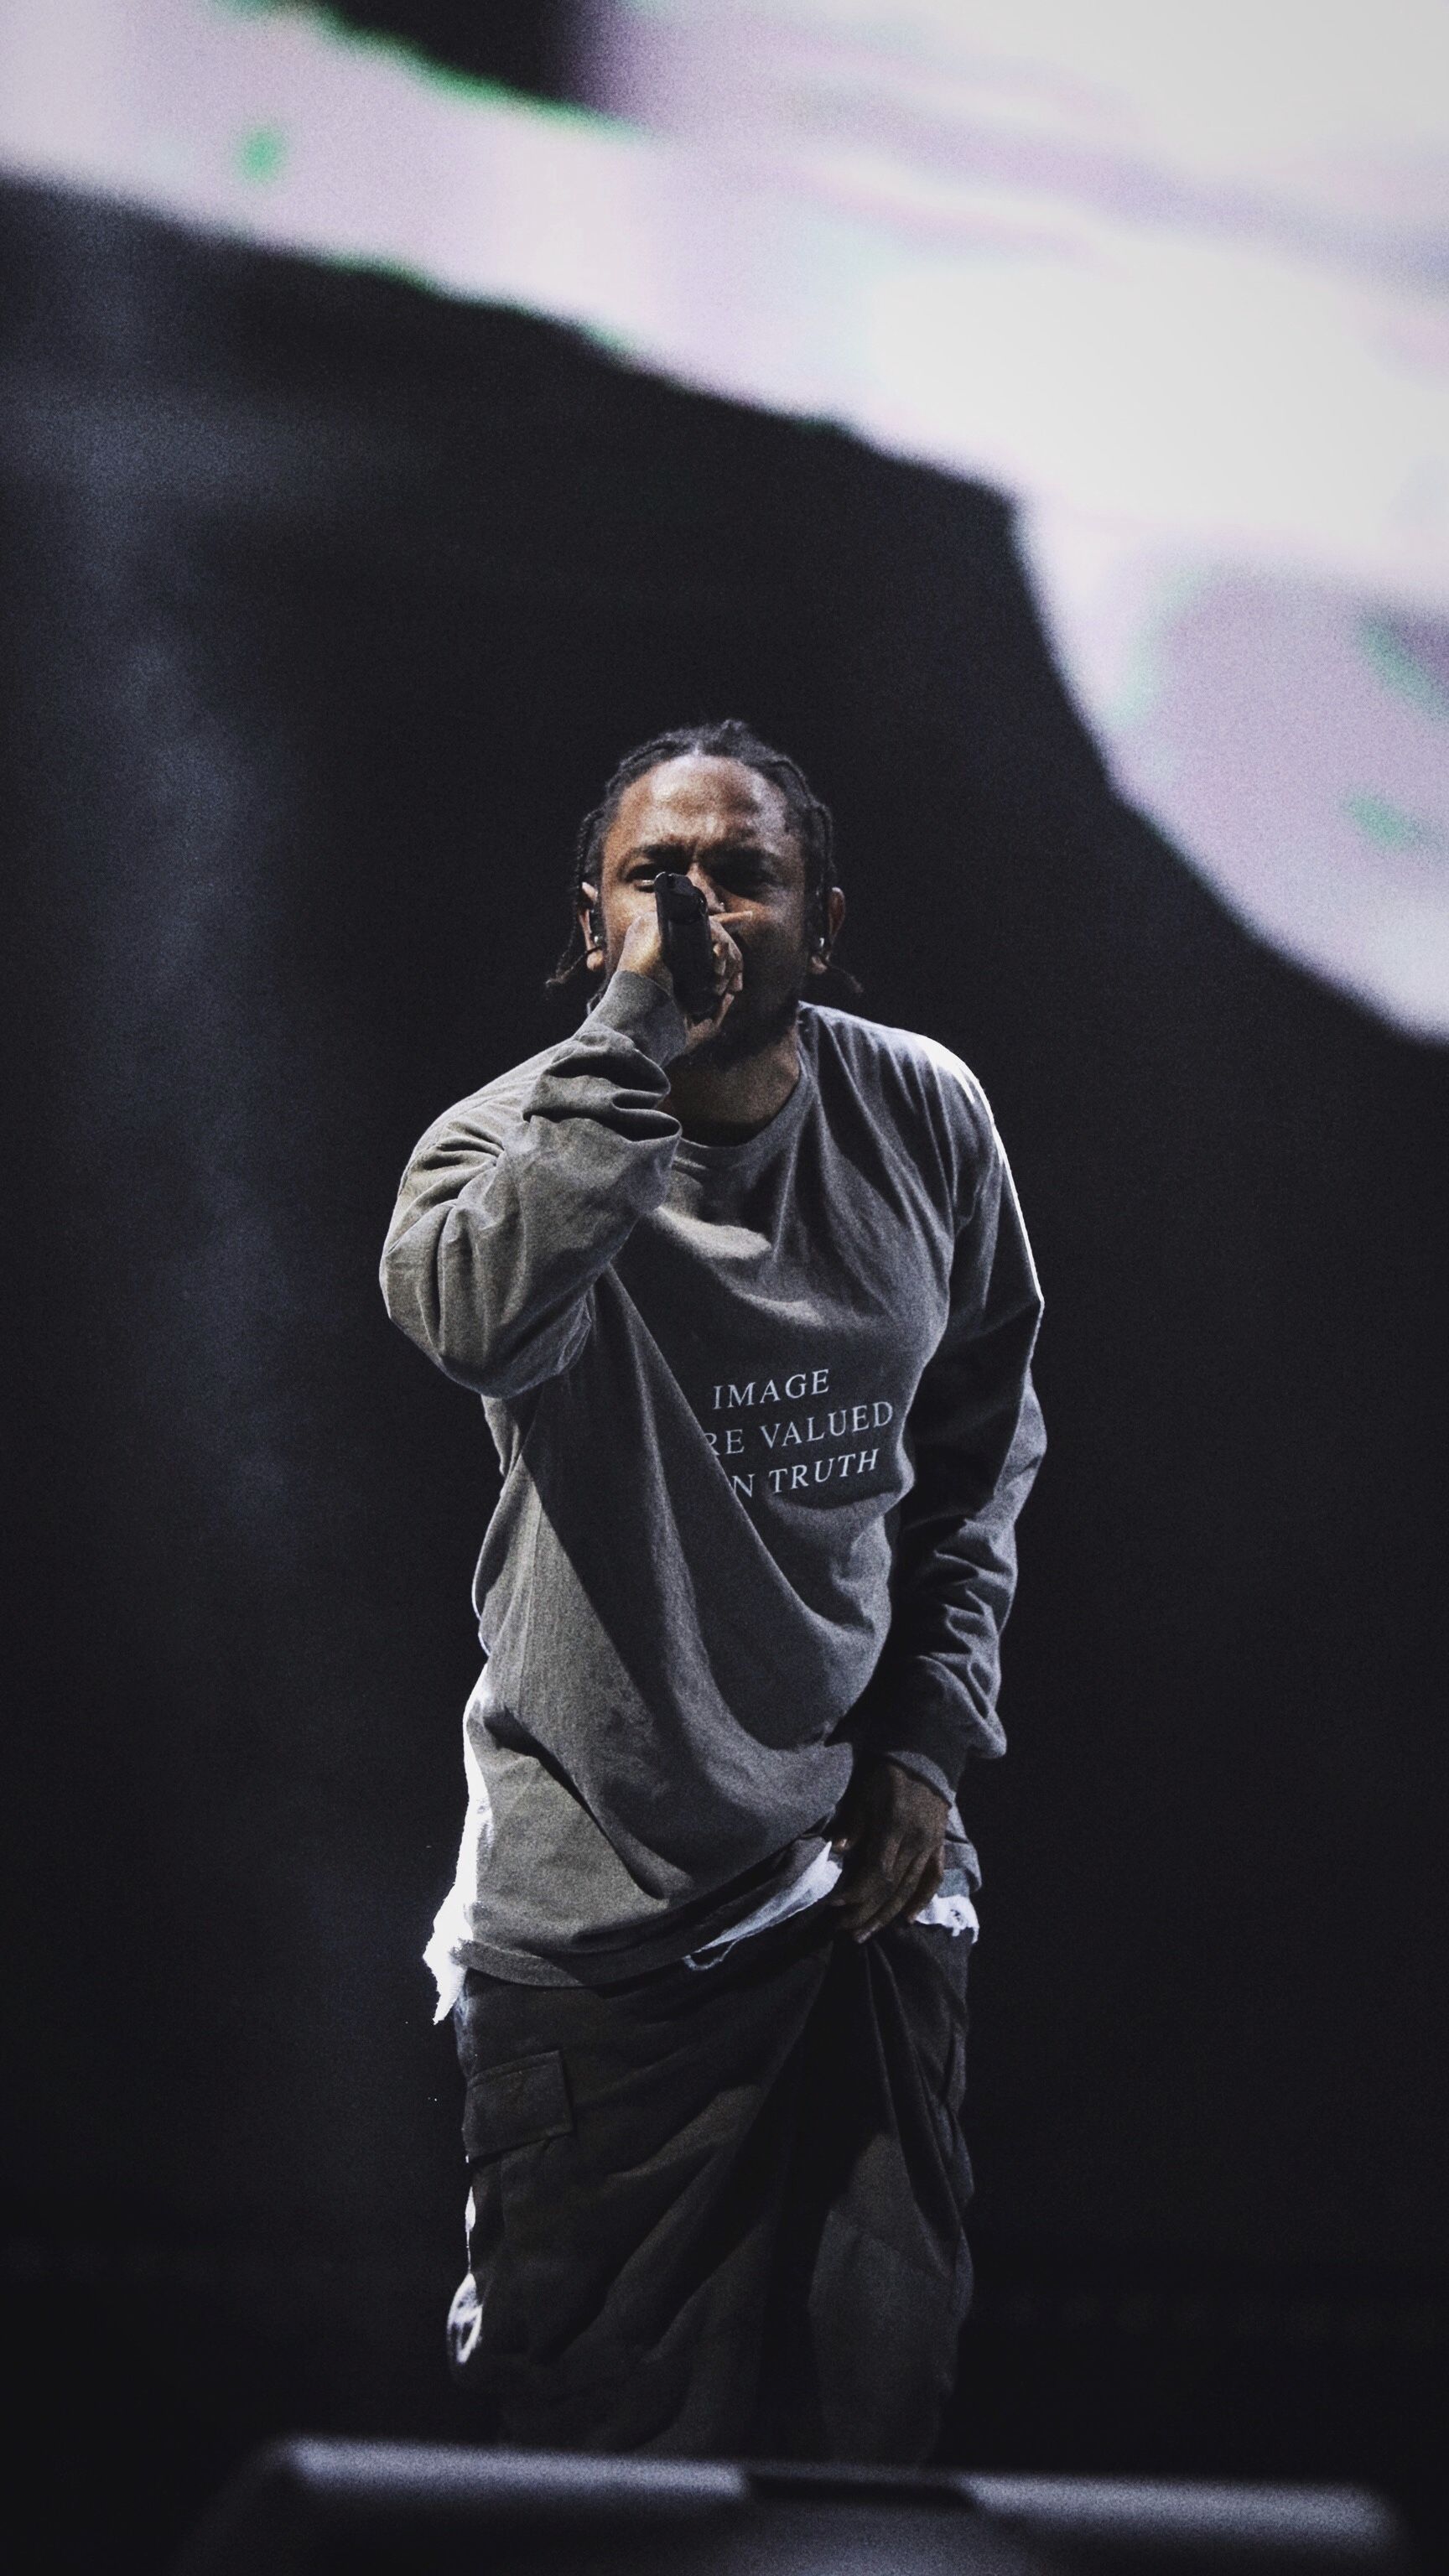 Kendrick lamar iãin fikir rap mãzik rap mãzik